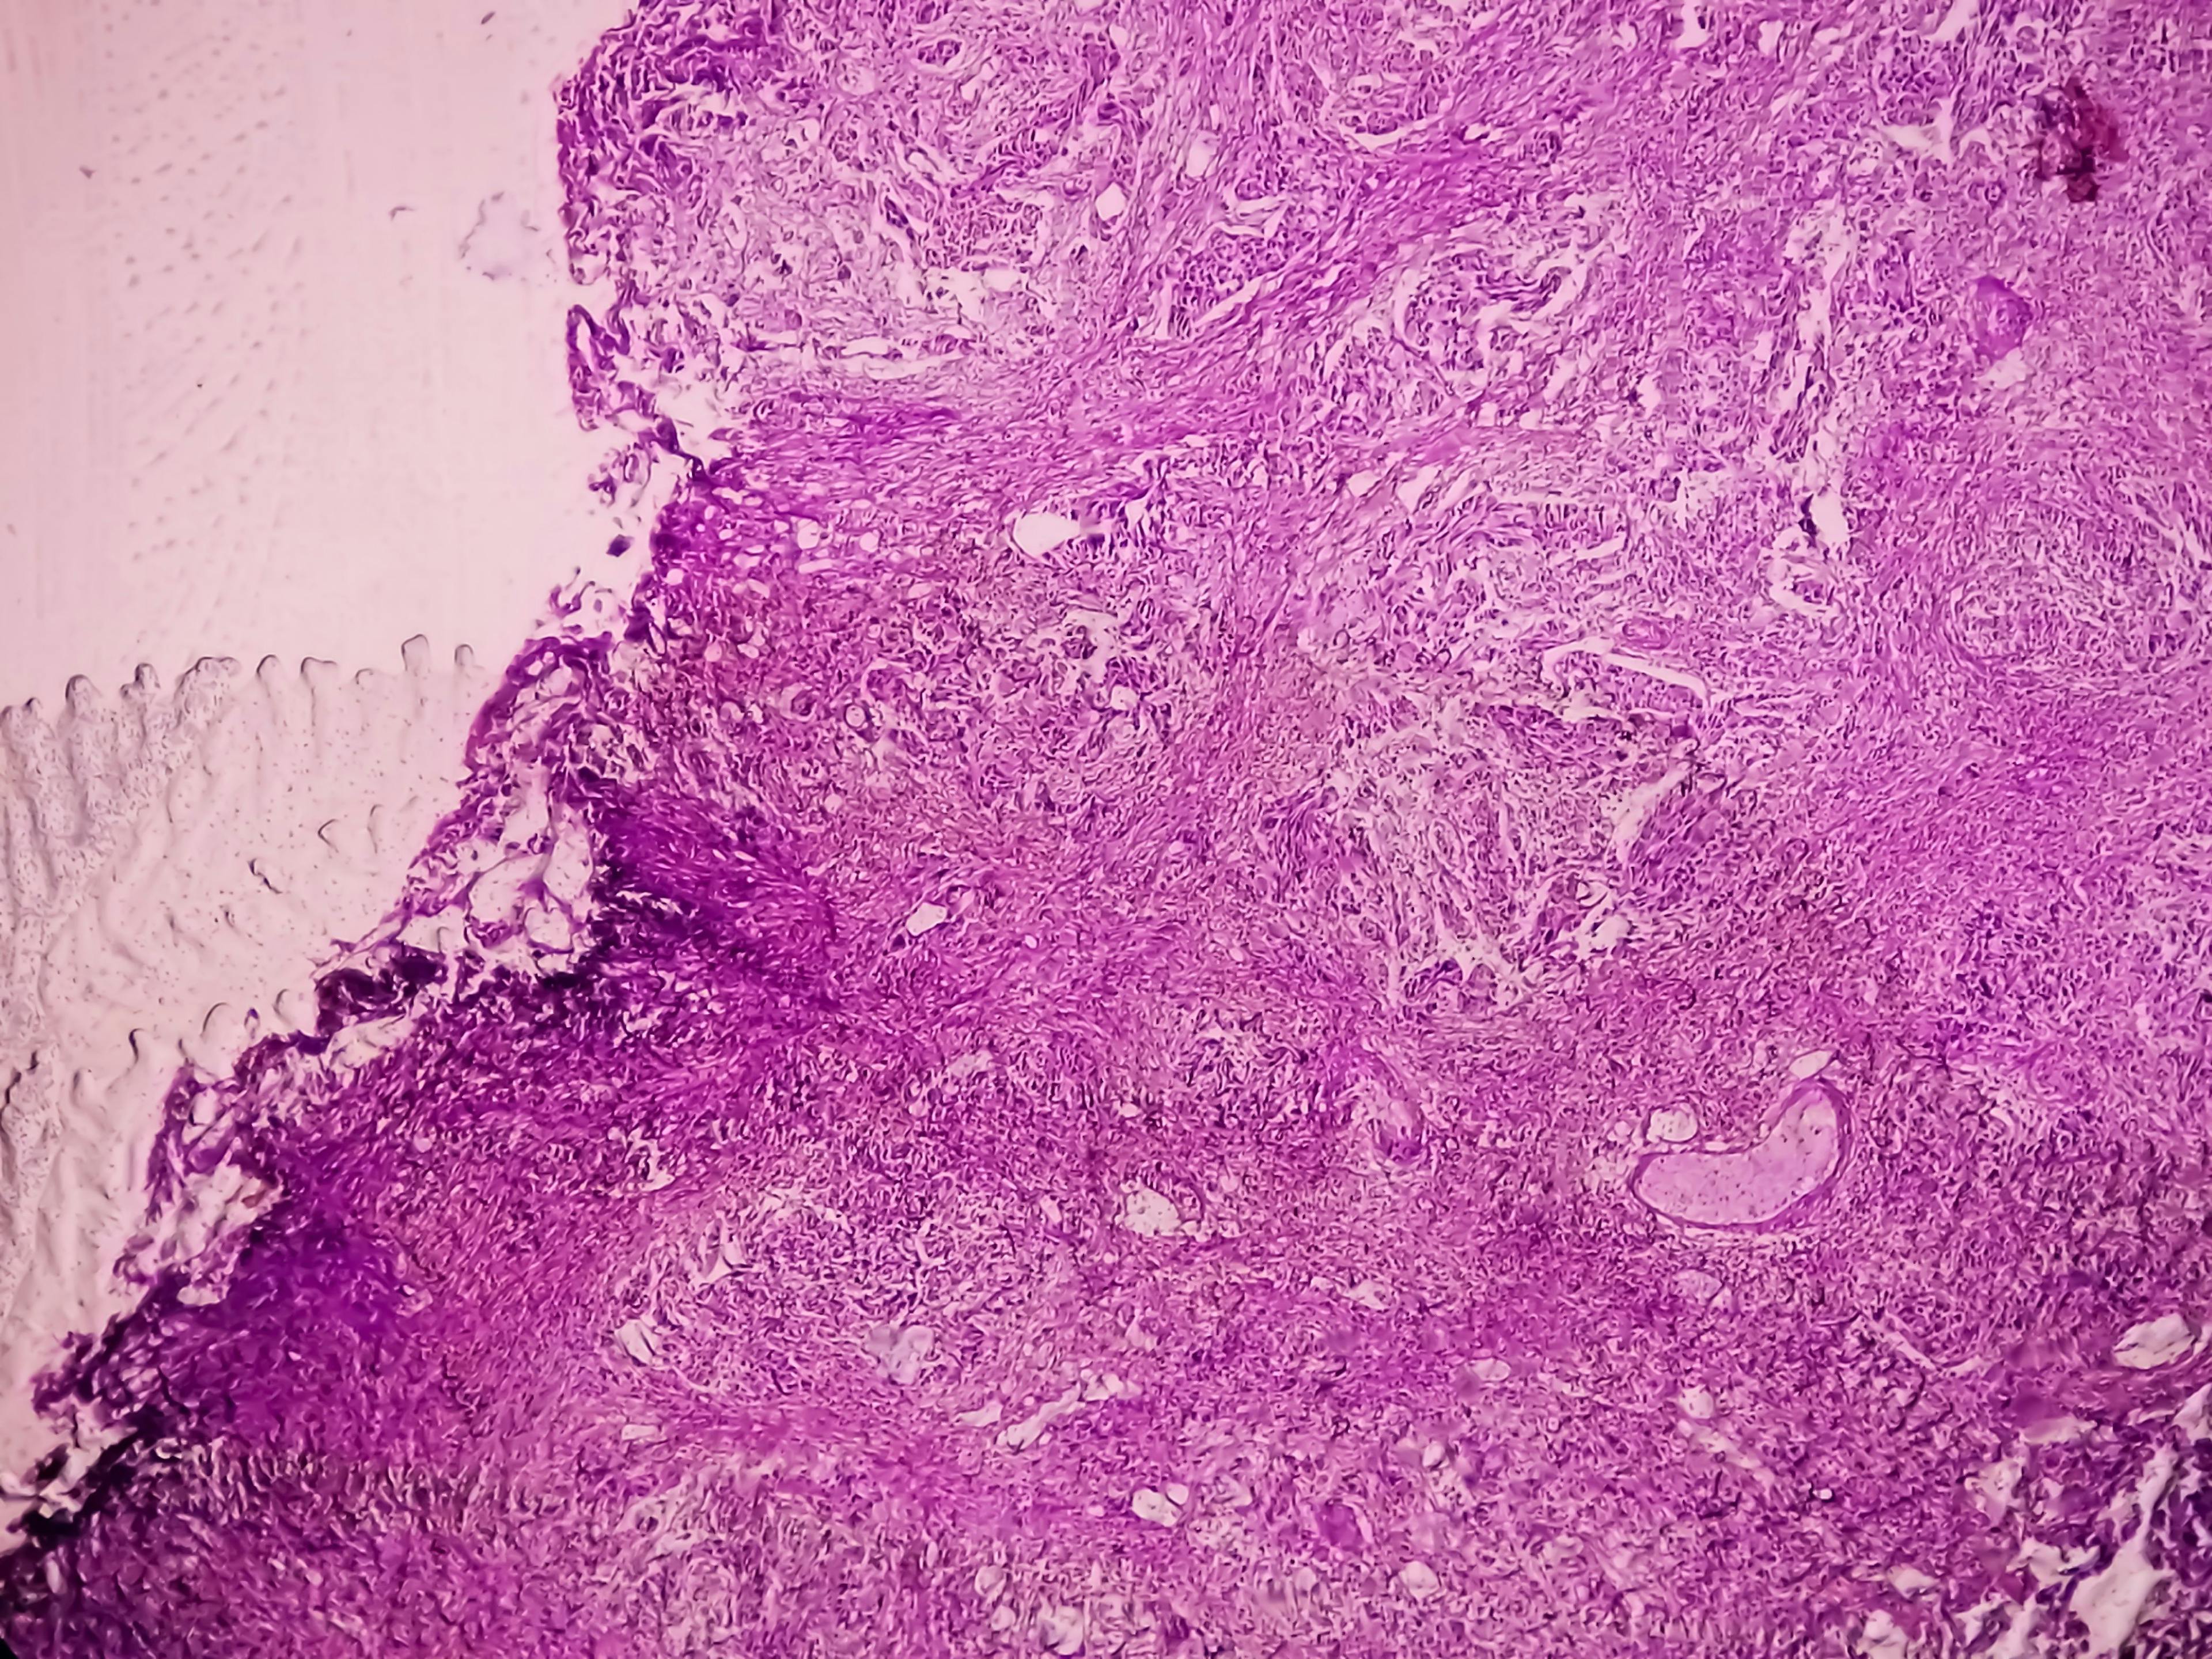 Bladder Cancer: High grade transitional cell carcinoma (TCC), Urothelial carcinoma | Image Credit: © Saiful52 -www.stock.adobe.com